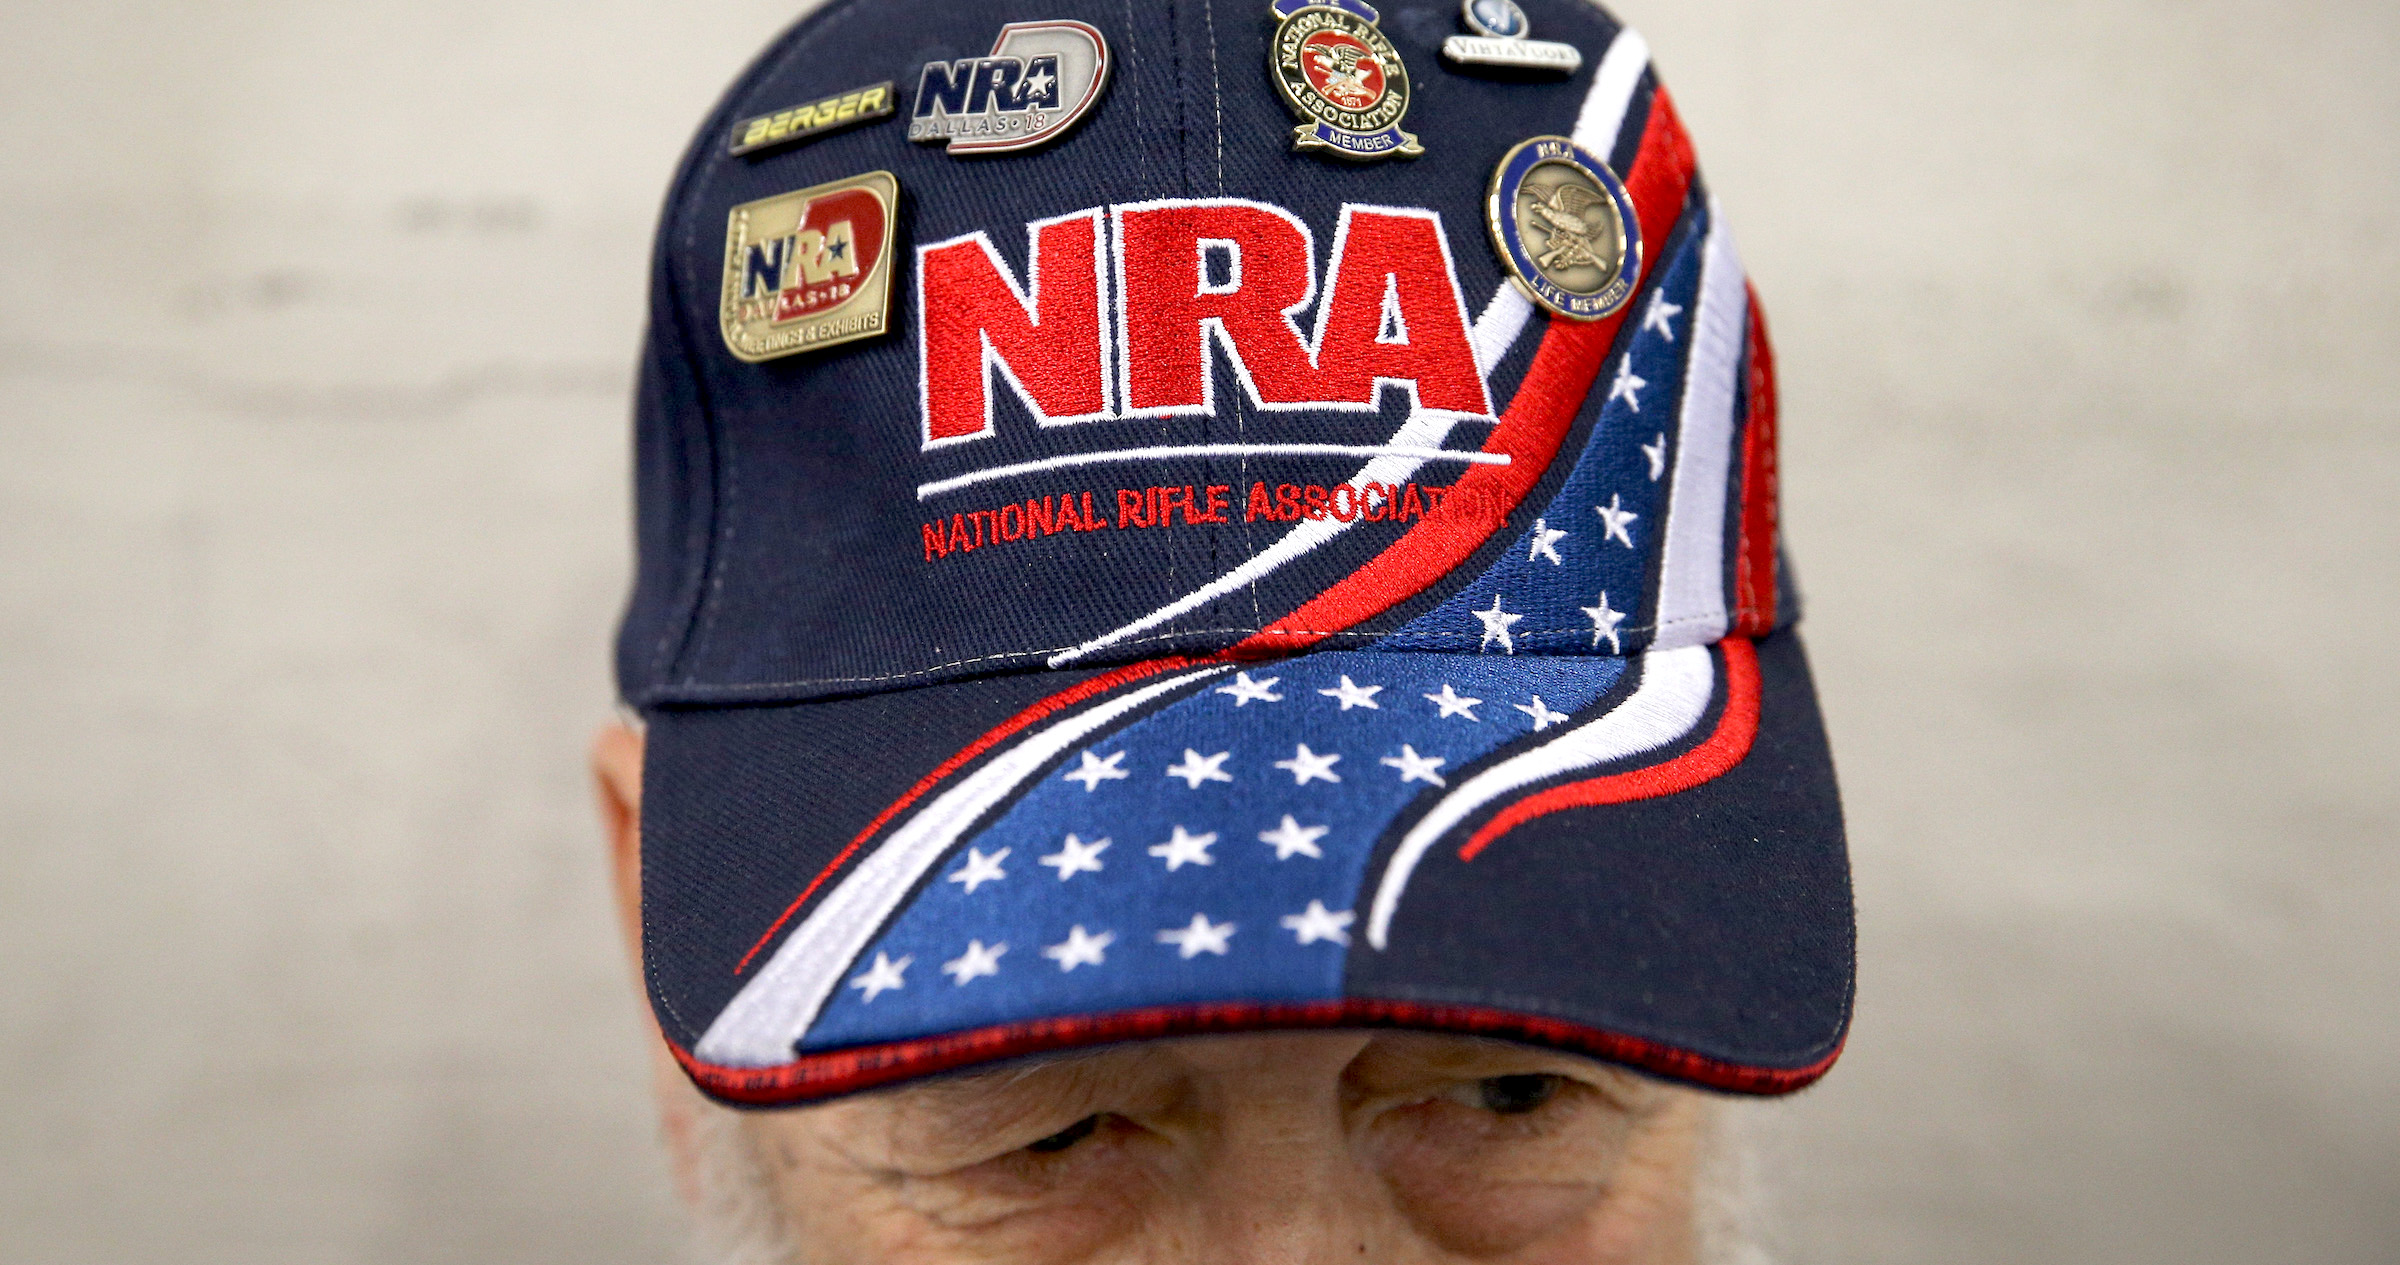 3pc Anti Obama Gun Control NRA National Rifle Association Sign Decal Sticker USA 